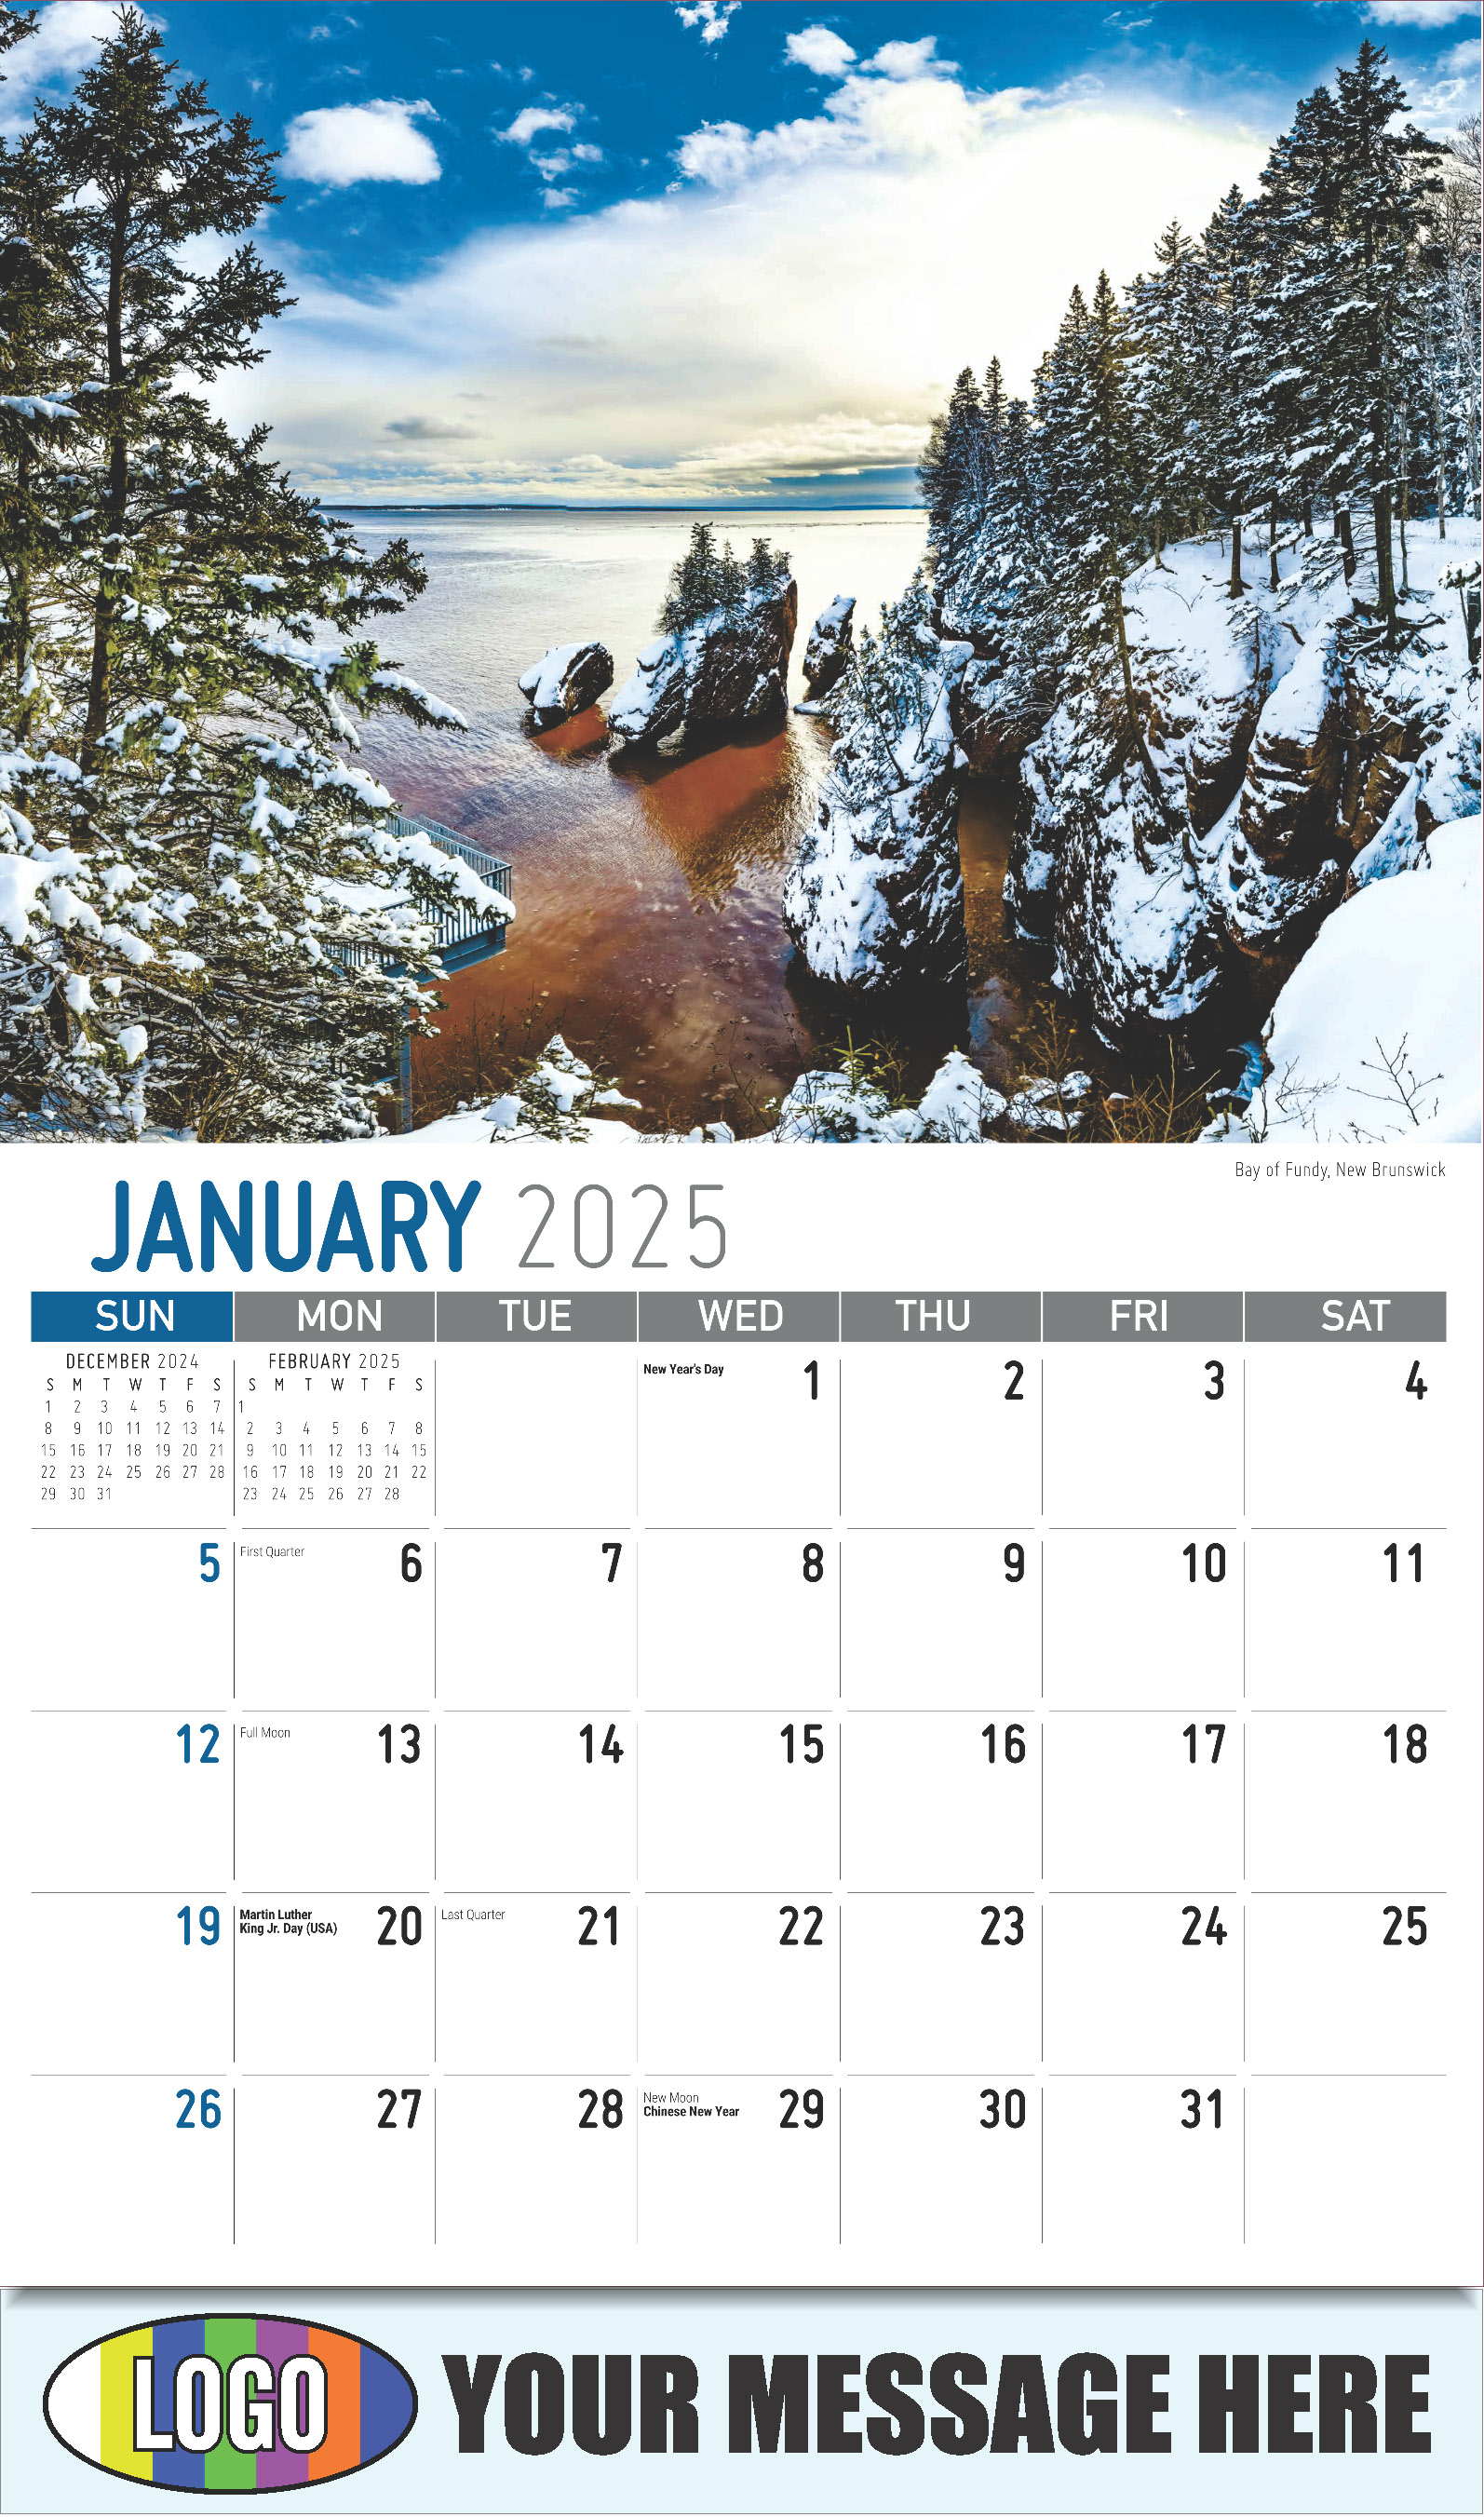 Atlantic Canada Scenic 2025 Business Promotion Calendar - January